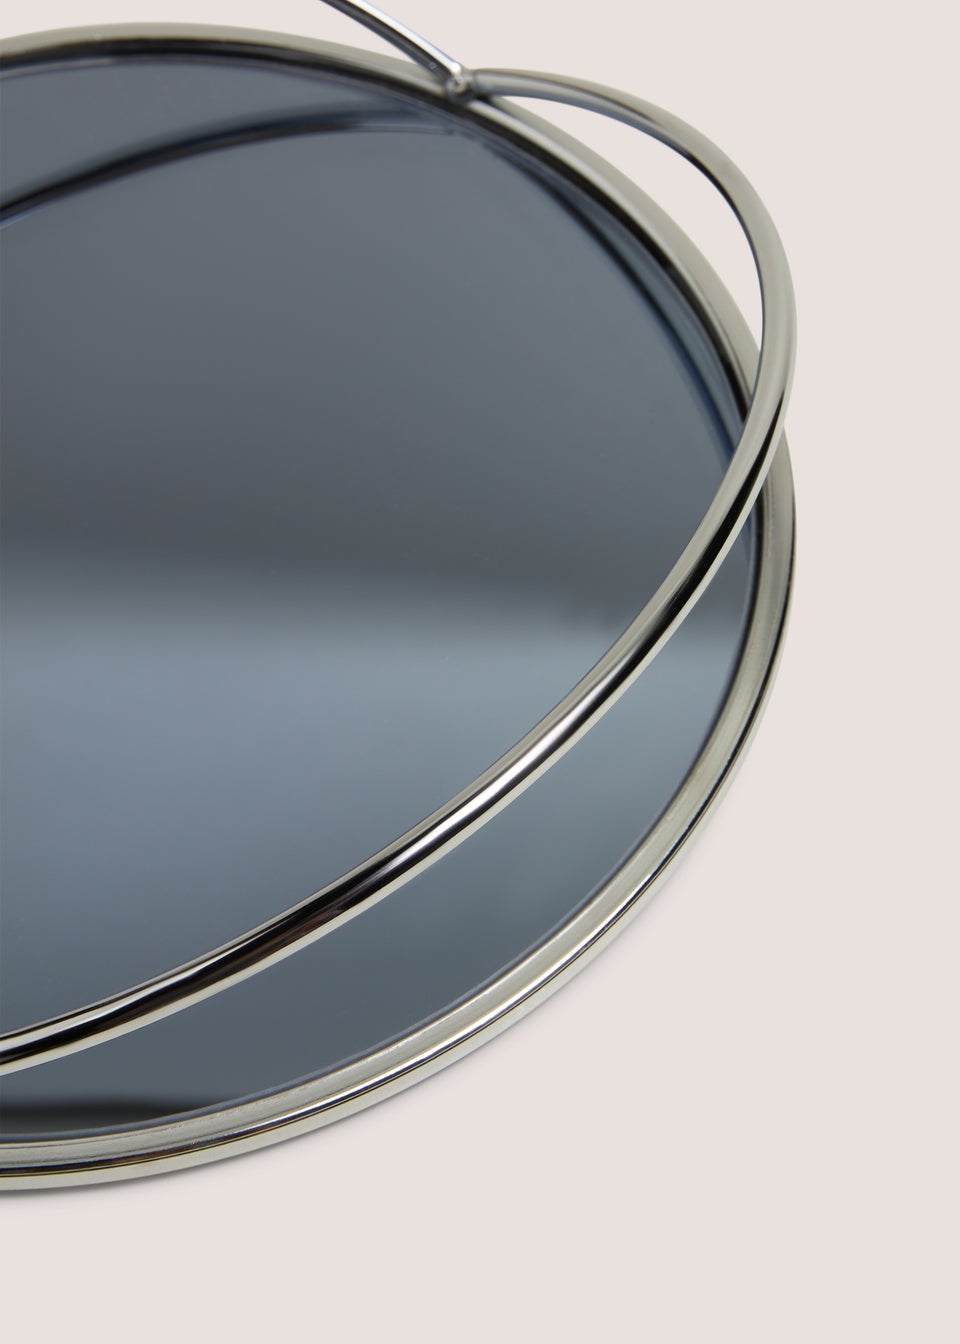 Black Mirrored Tray (29.5cm x 29.5cm x 5.6cm)